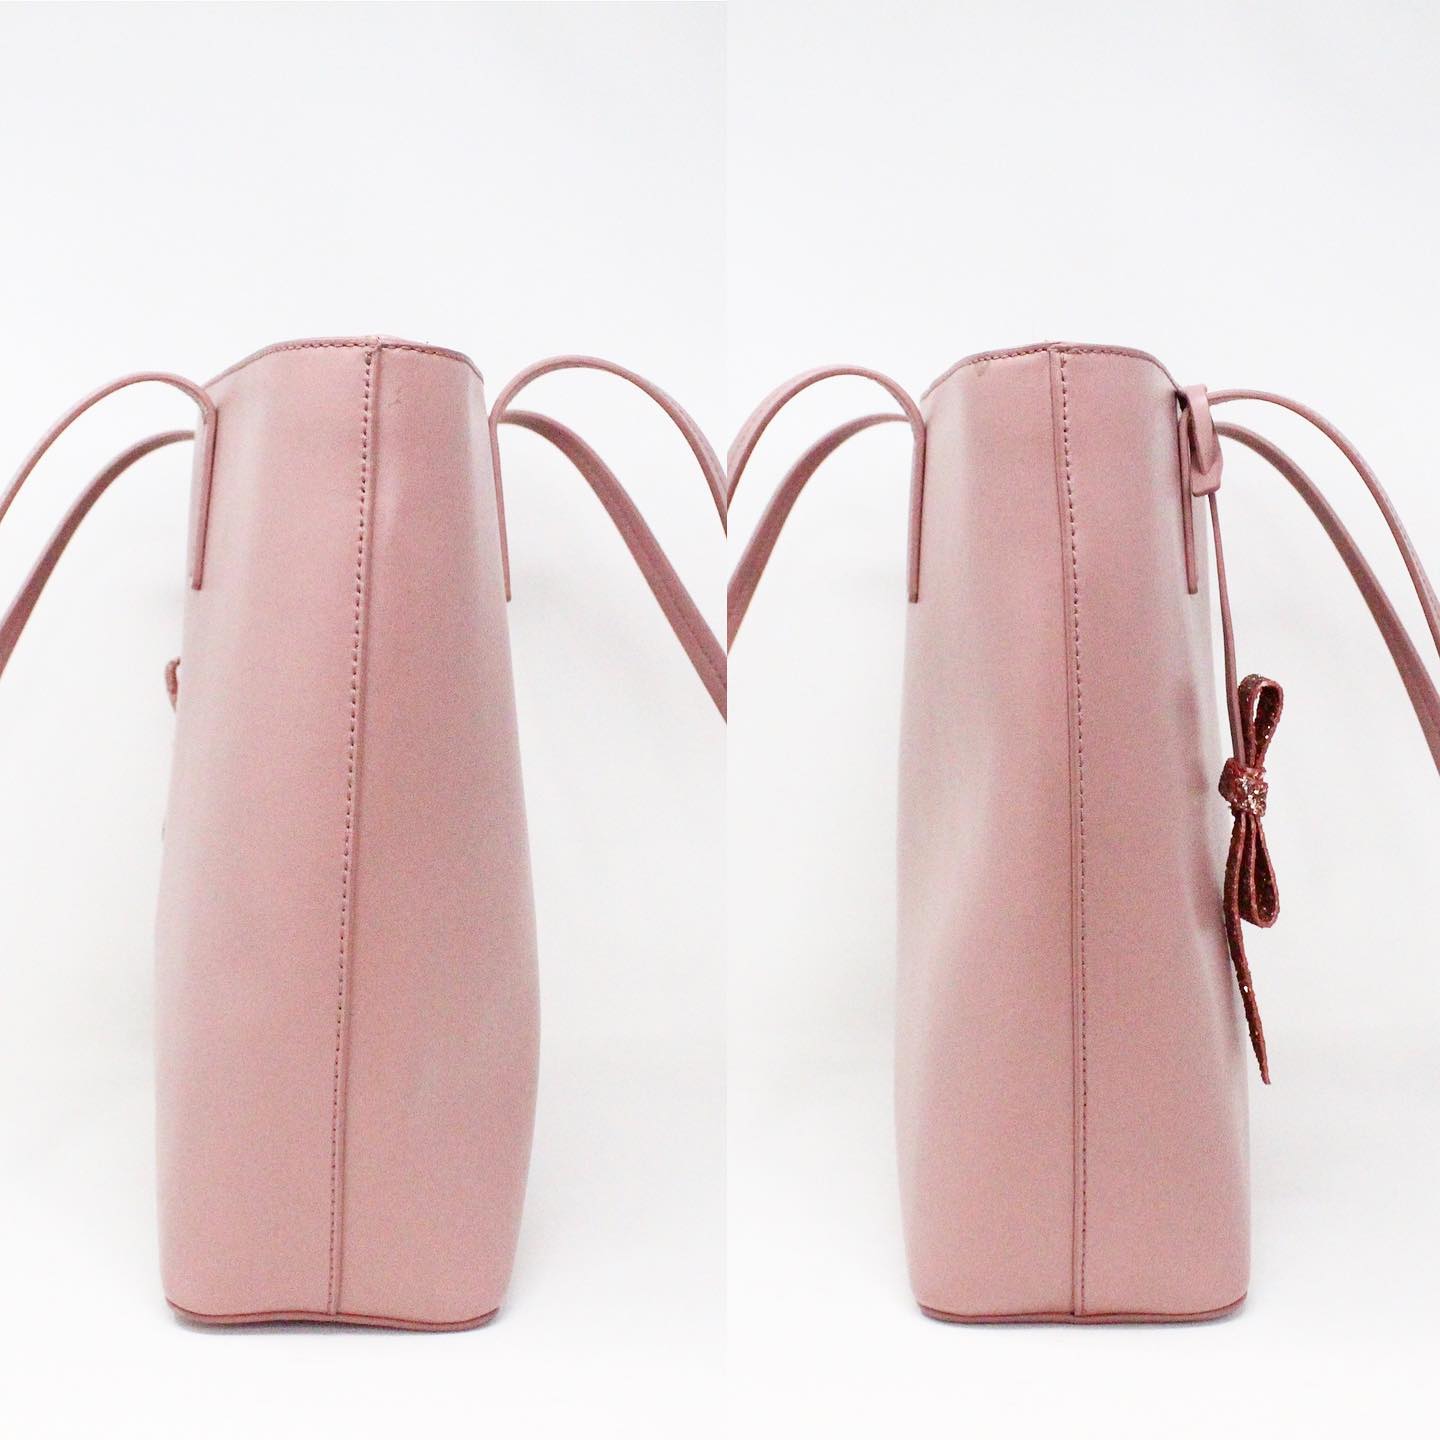 Kate Spade / Tote / Handbag / Pastel Pink / Limited